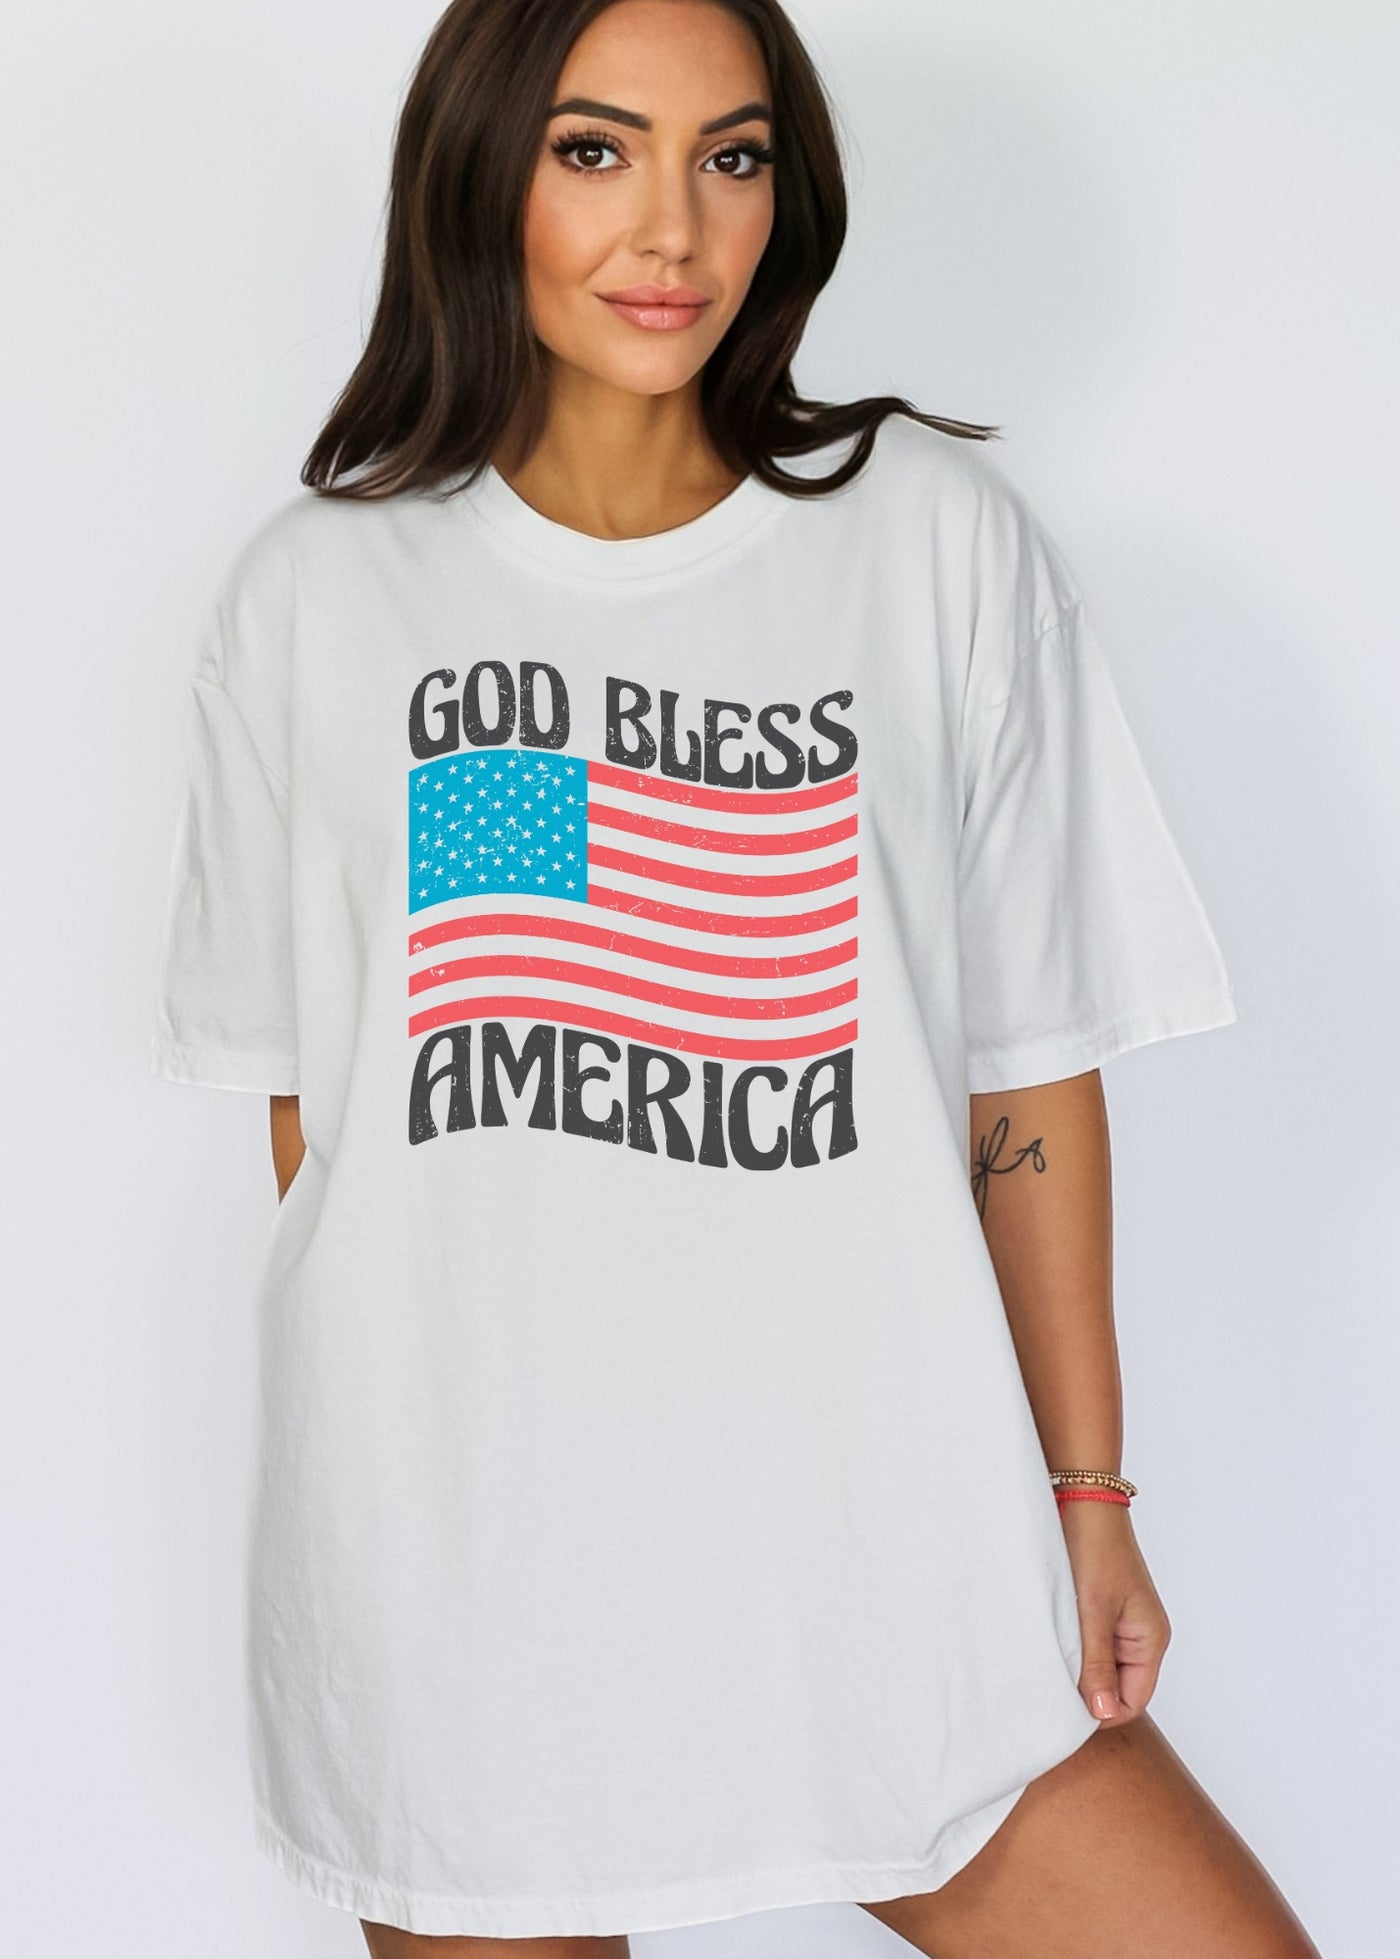 God Bless America - Distressed